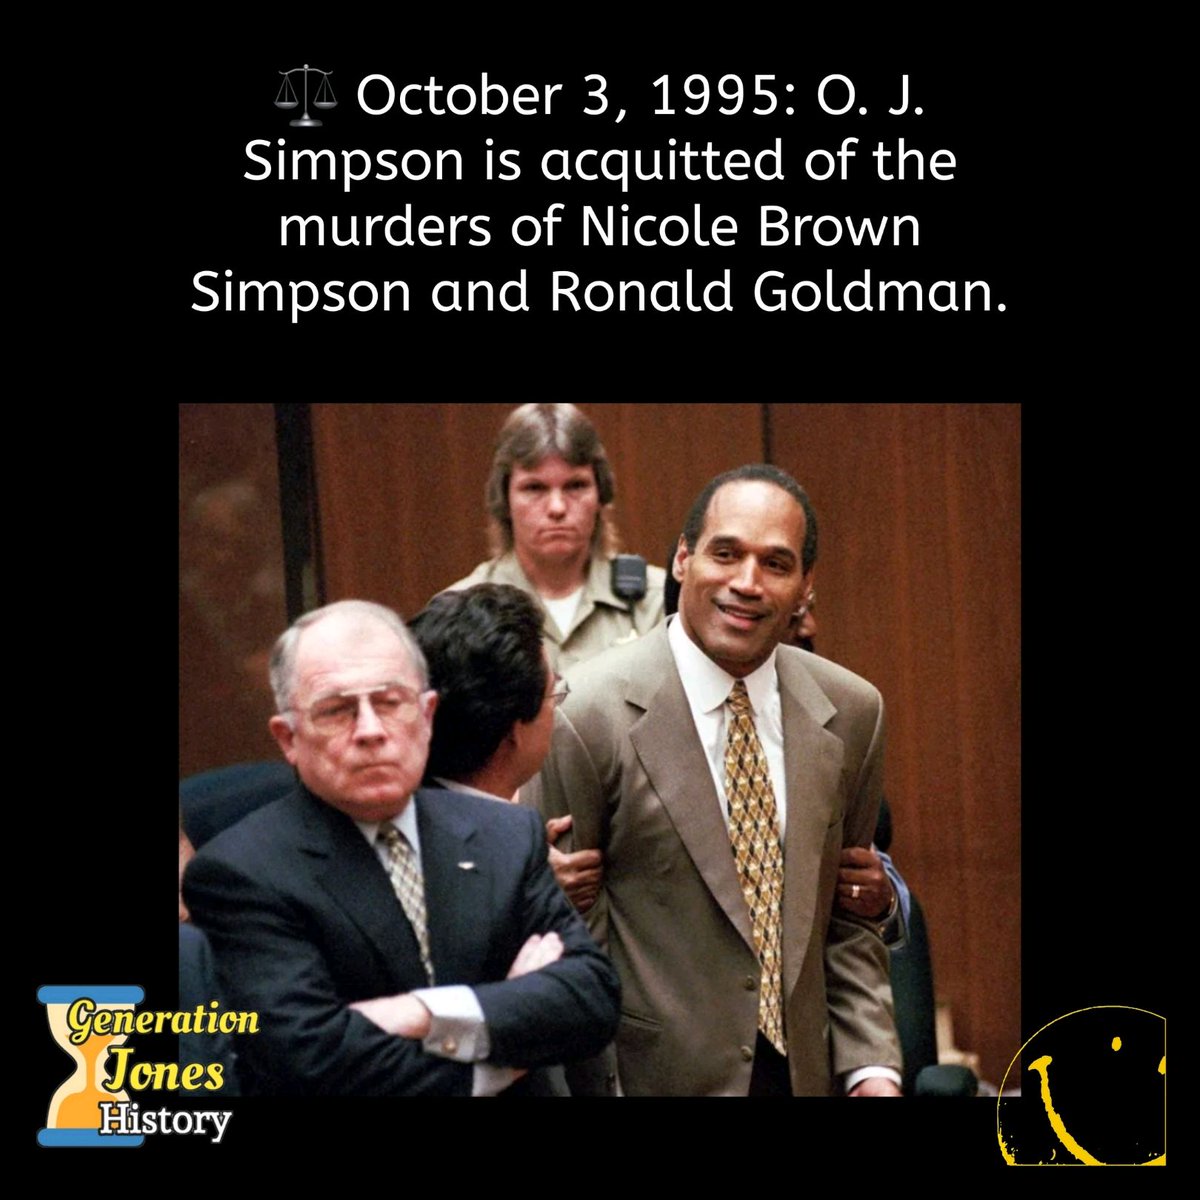 ⚖️ October 3, 1995:
#trialofthecentury #ojsimpson #acquittal #crime #nicolebrownsimpson #shocker #history #ushistory #1990s #generationjones #generationx #babyboom